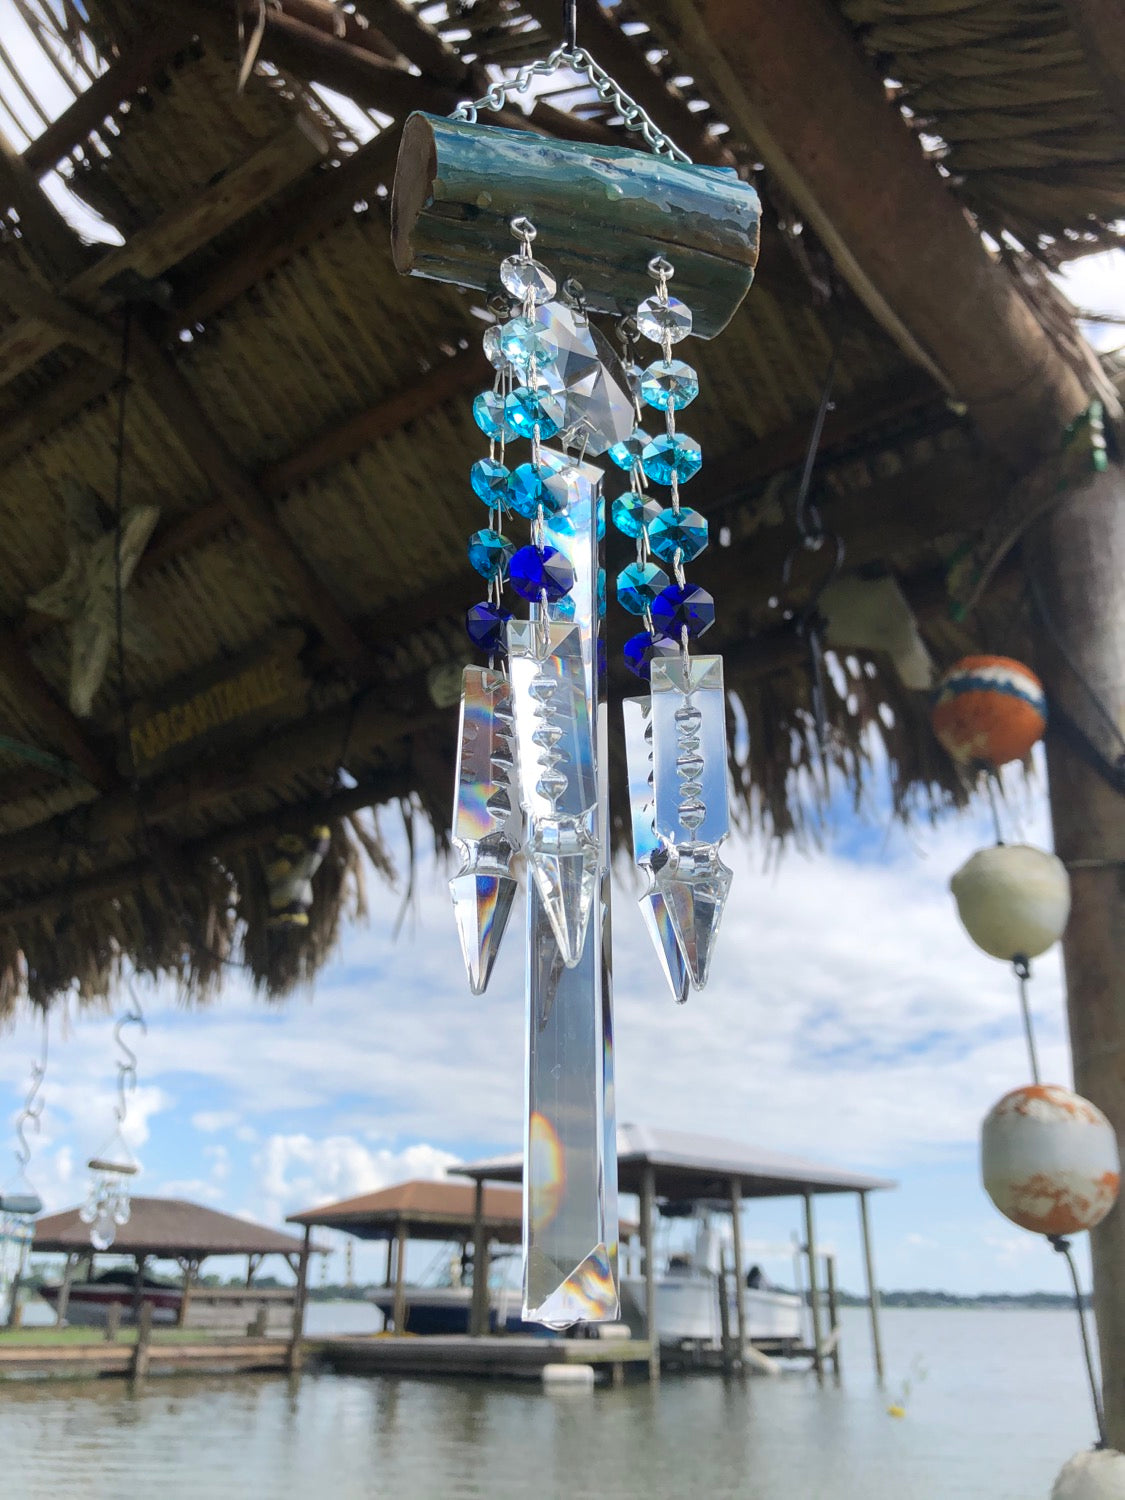 wind-chime sun-catcher dazzling driftwood chandelier crystals unique gifts handmade art